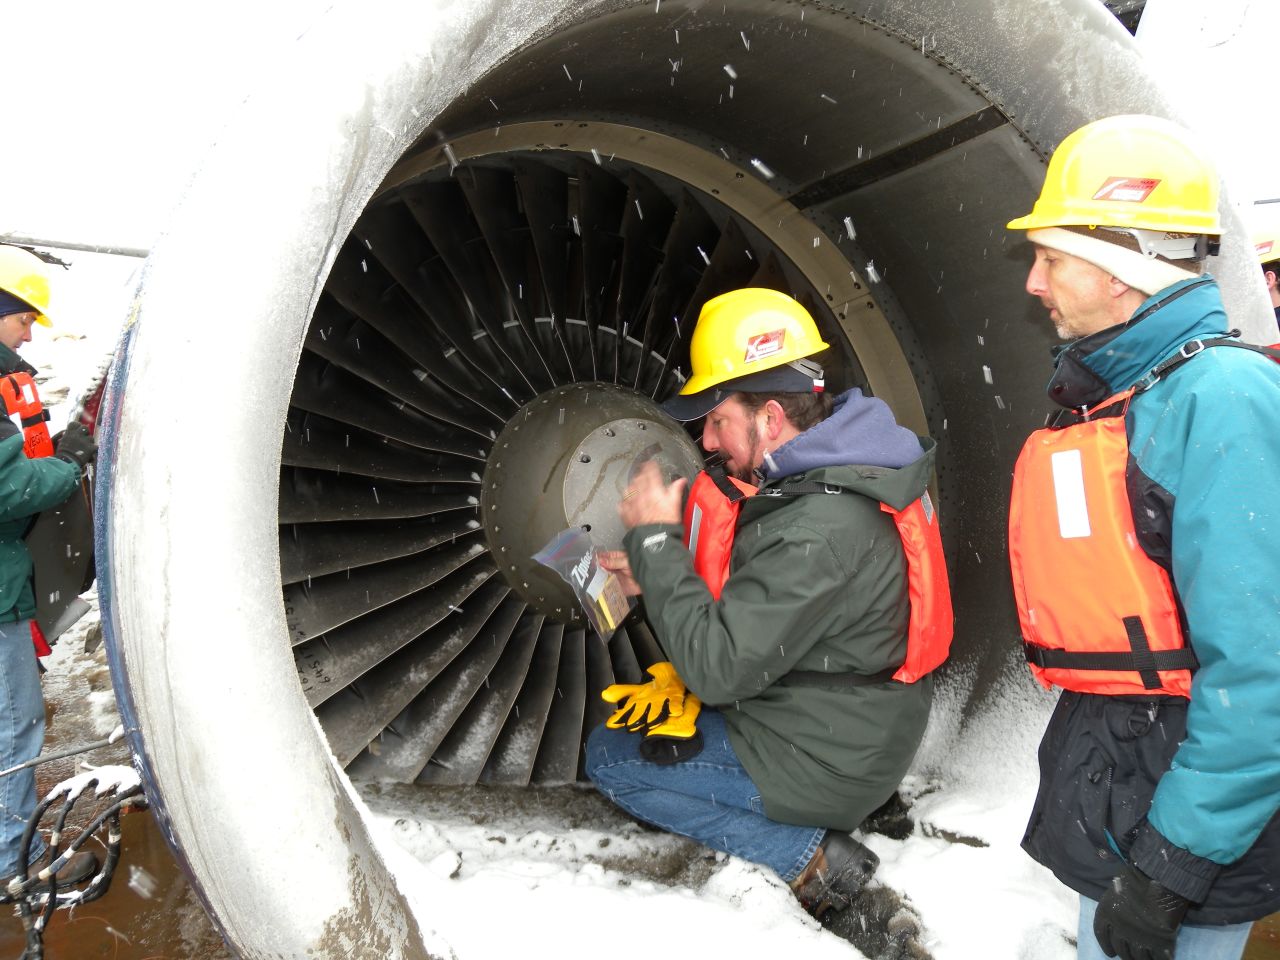 Mike Begier, national coordinator of the USDA Airport Wildlife Hazards Program investigates bird strike remains inside a damaged engine of US Airways Flight 1549 in 2009.